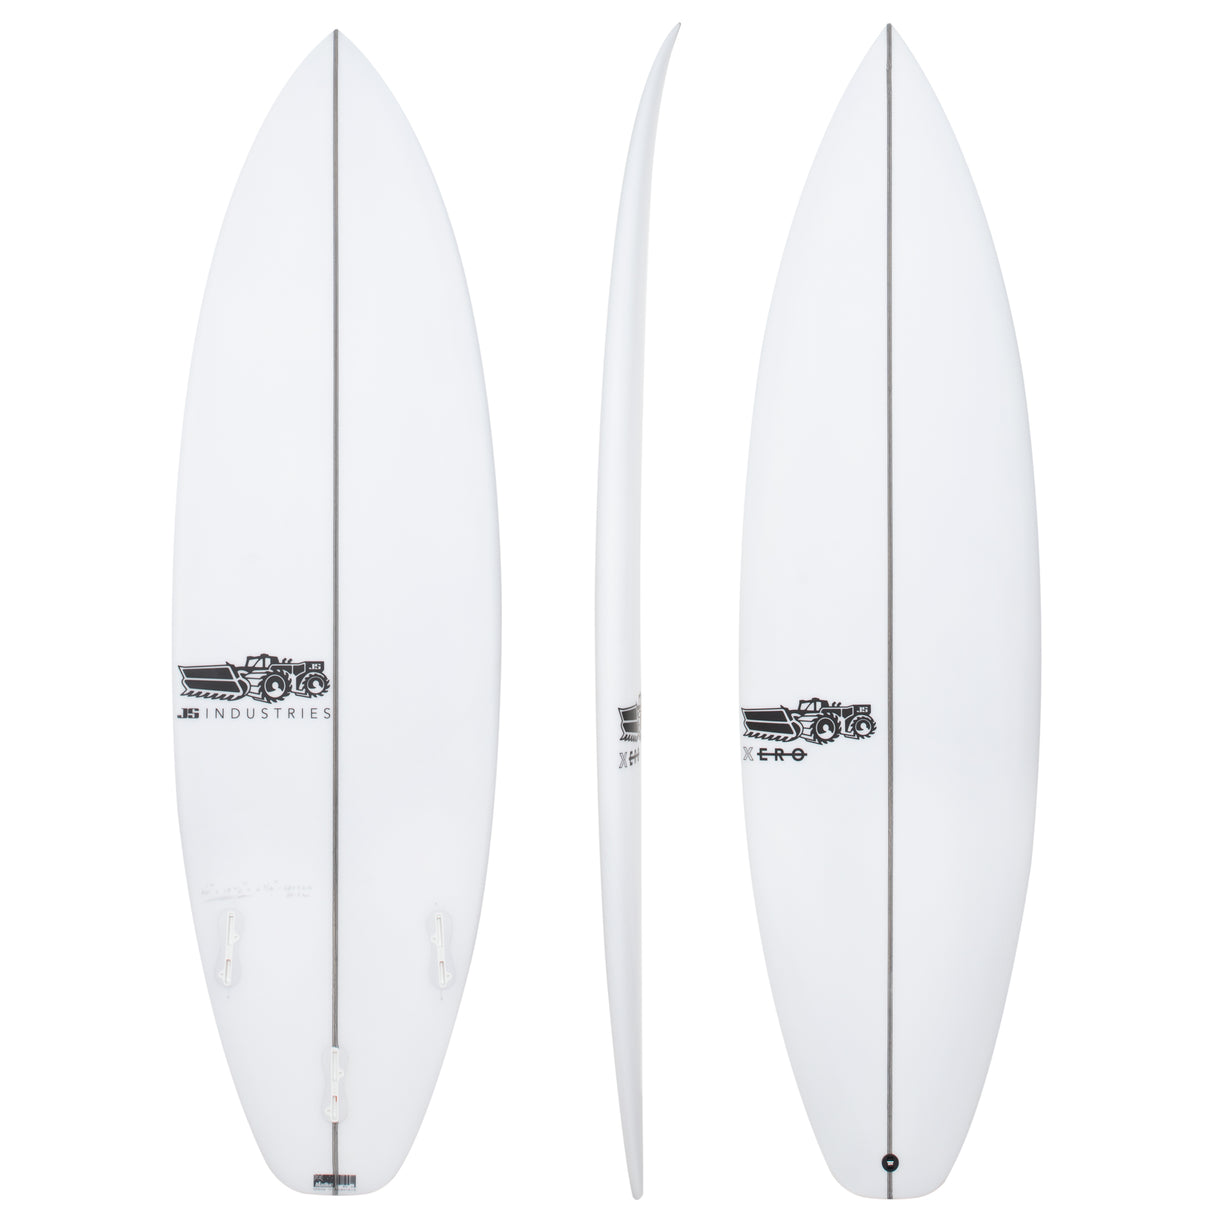 JS Industries XERO PU Squash Tail Surfboard (Easy Rider)